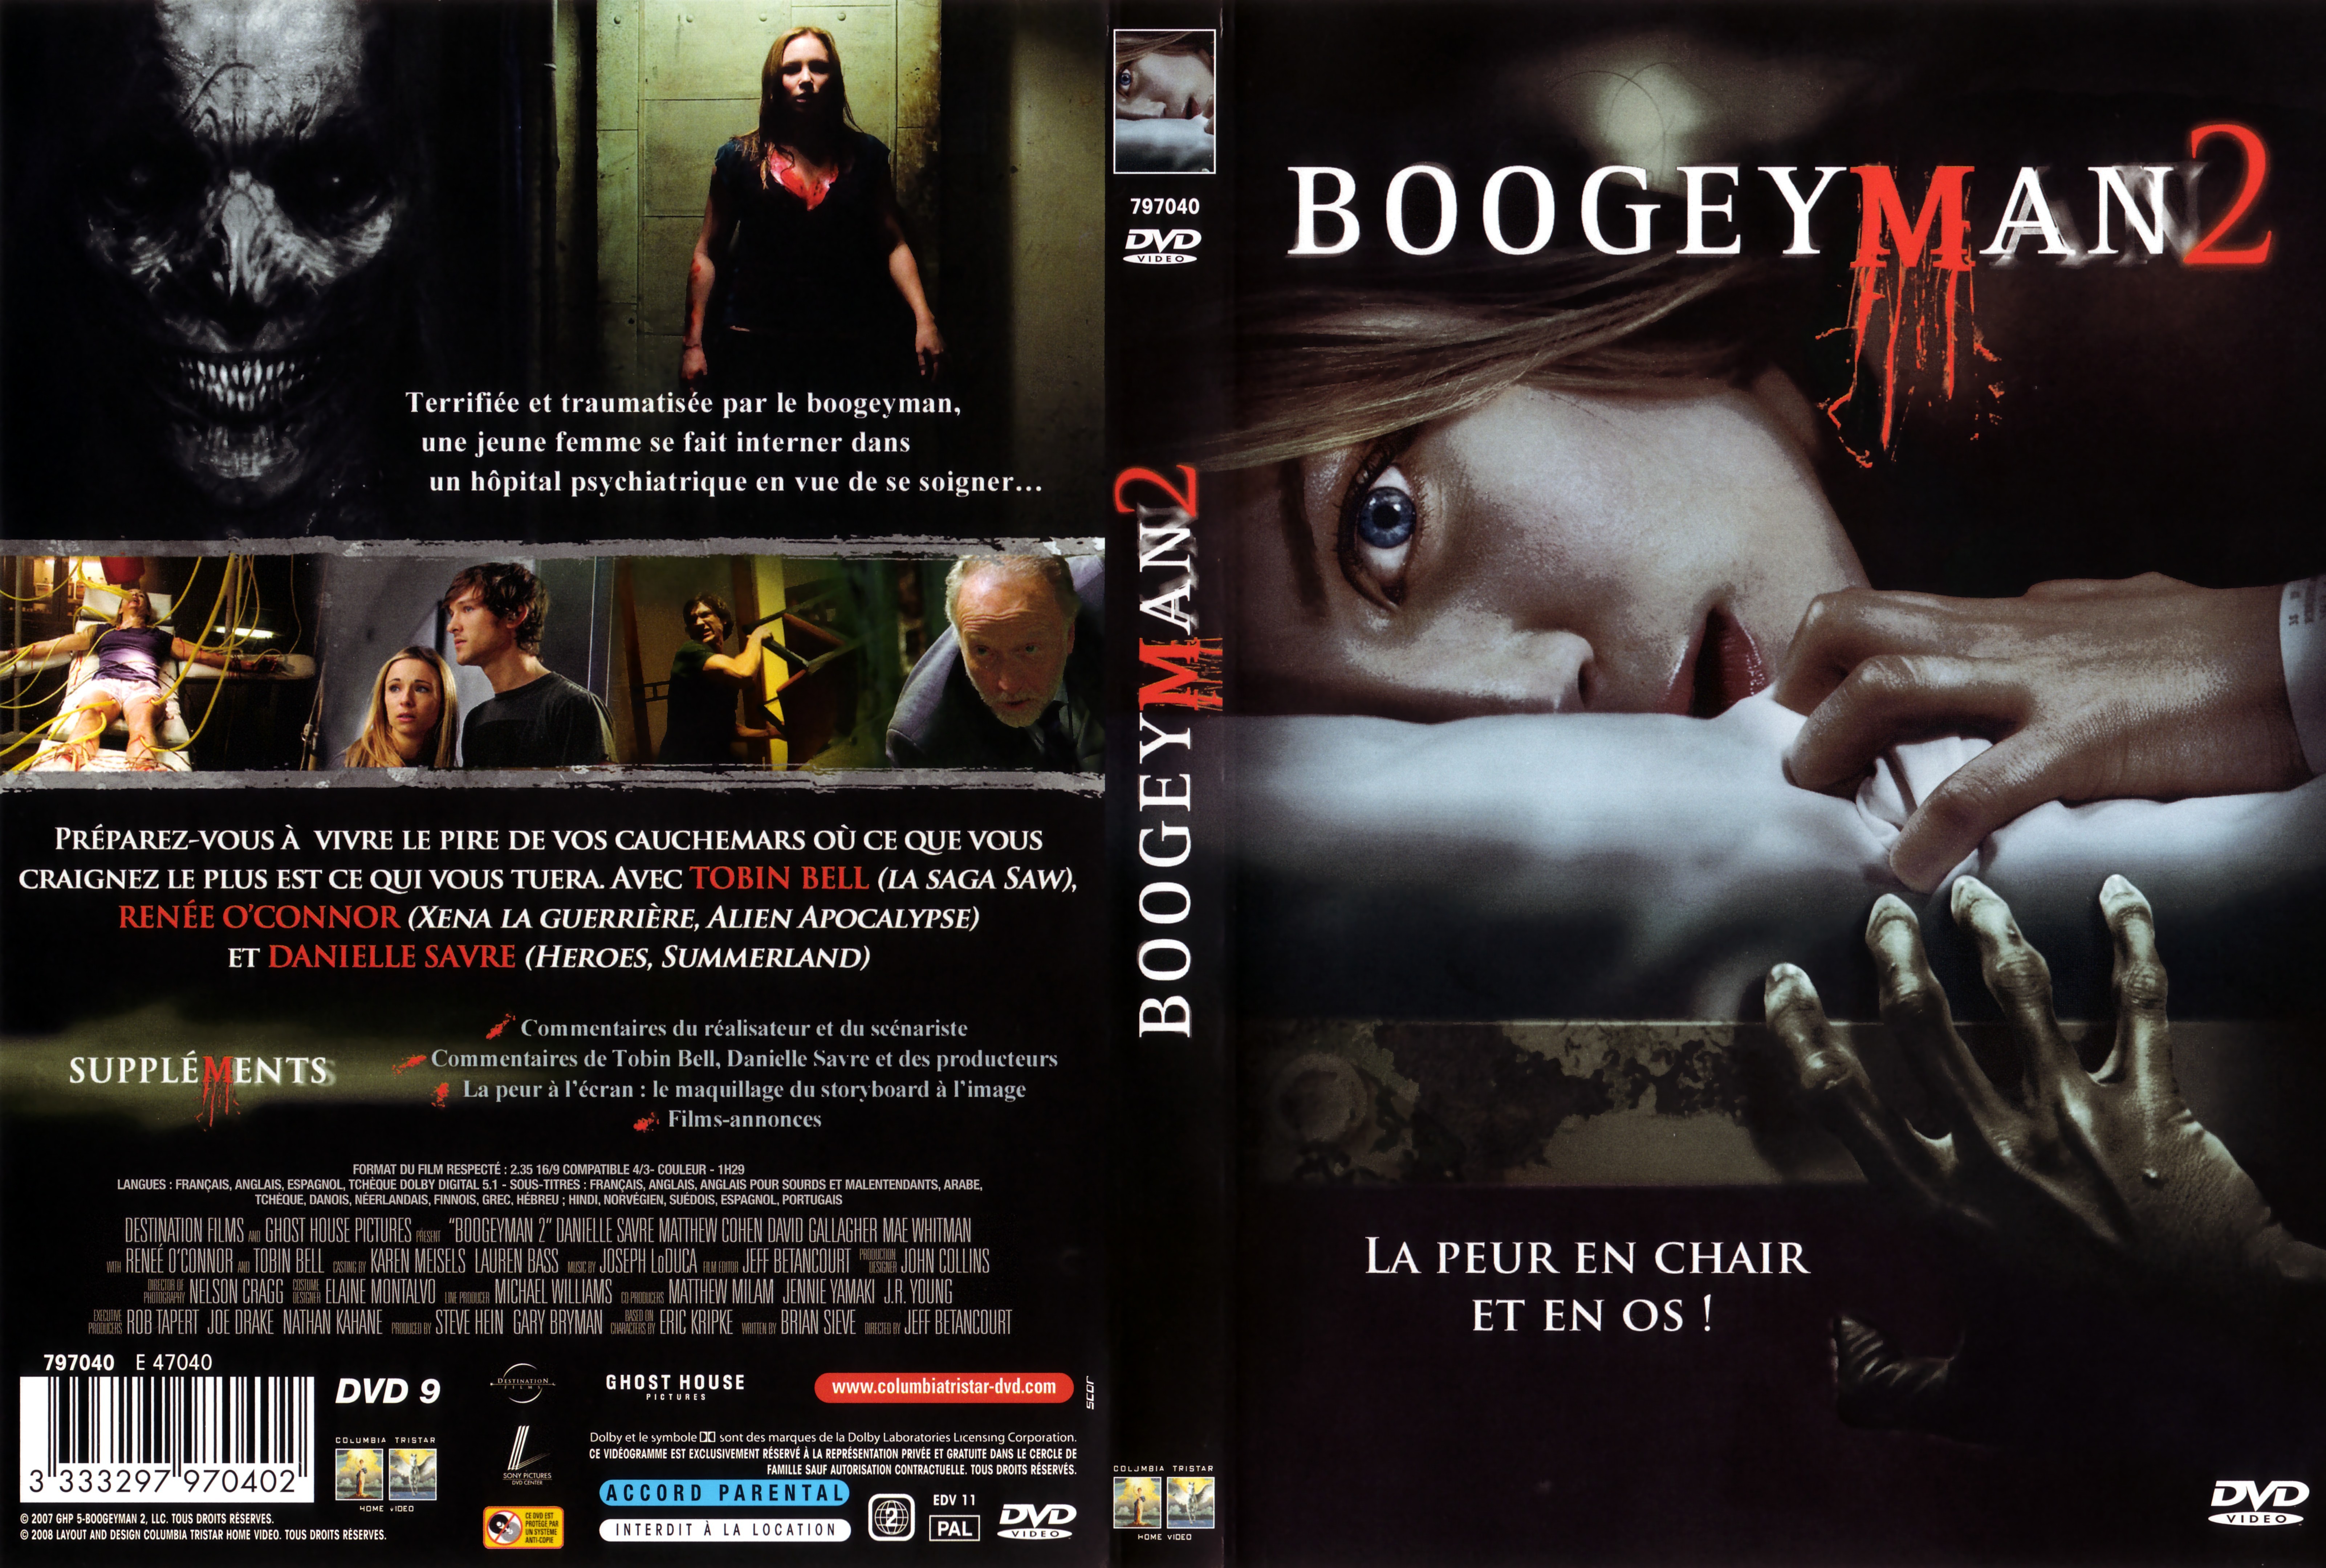 Jaquette DVD Boogeyman 2 v2